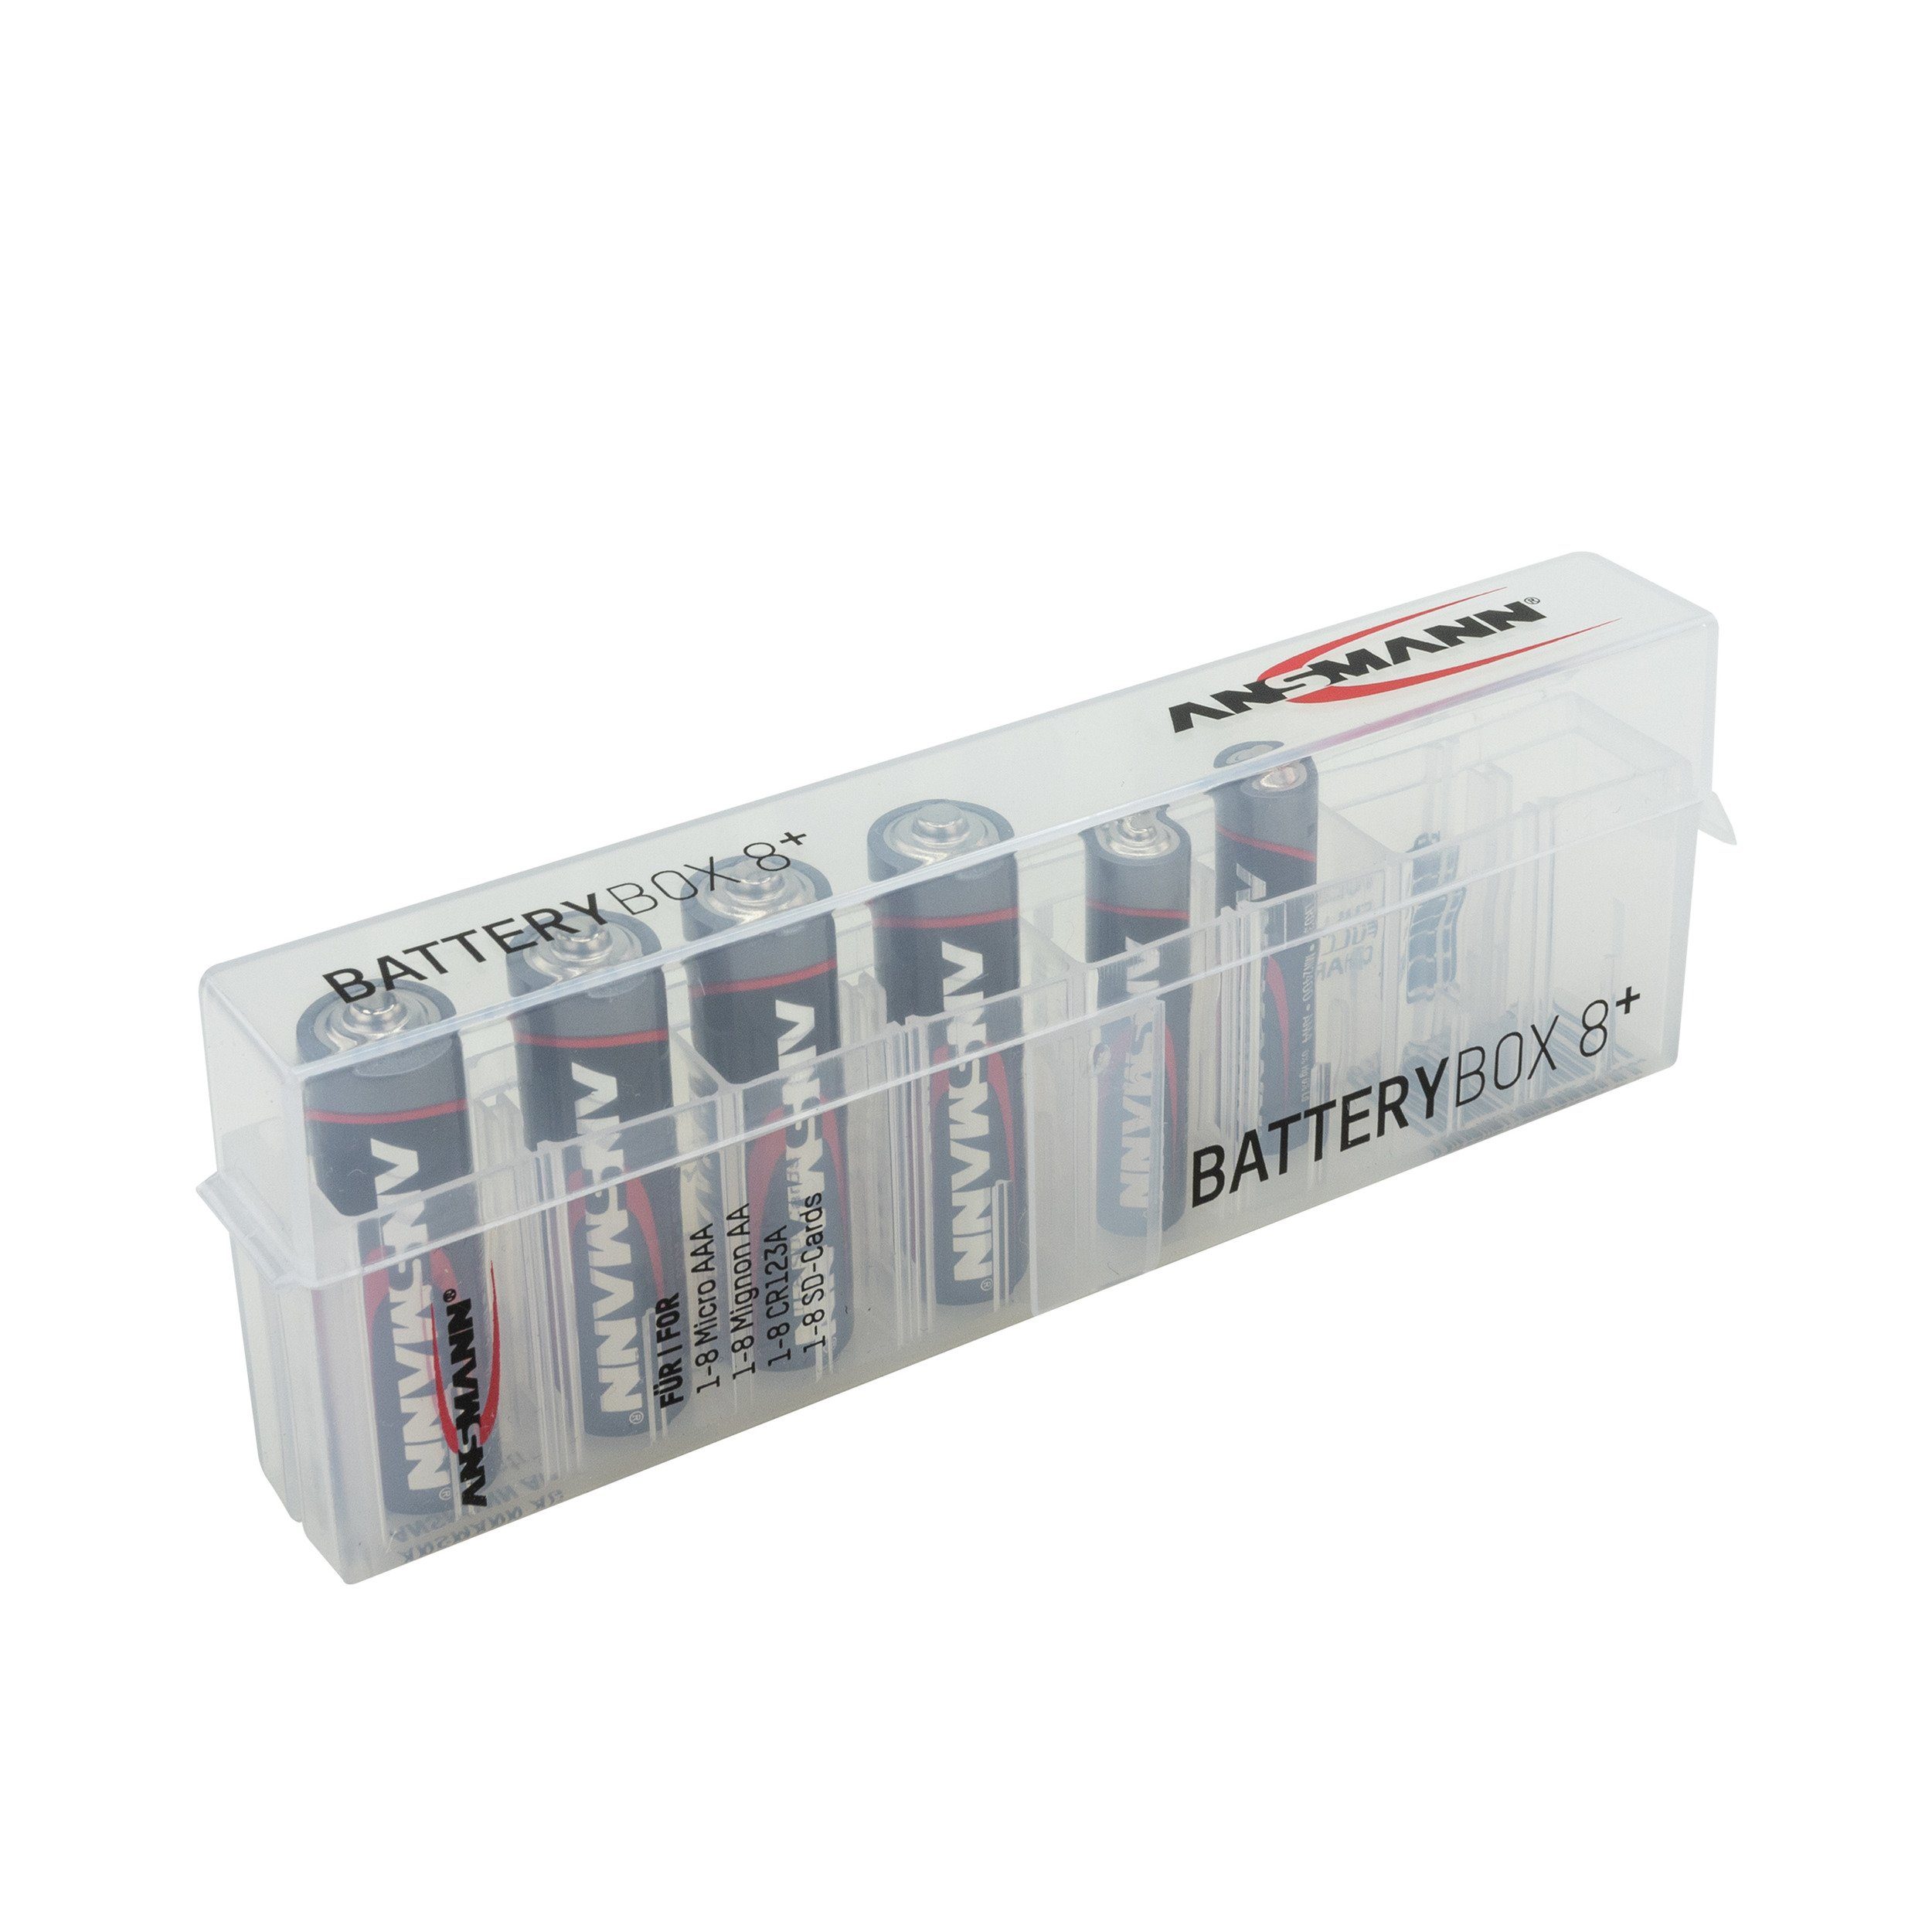 ANSMANN AG Akkubox - Aufbewahrung von bis zu 8 Akkus, Batterien o. Speicherkarten Akku